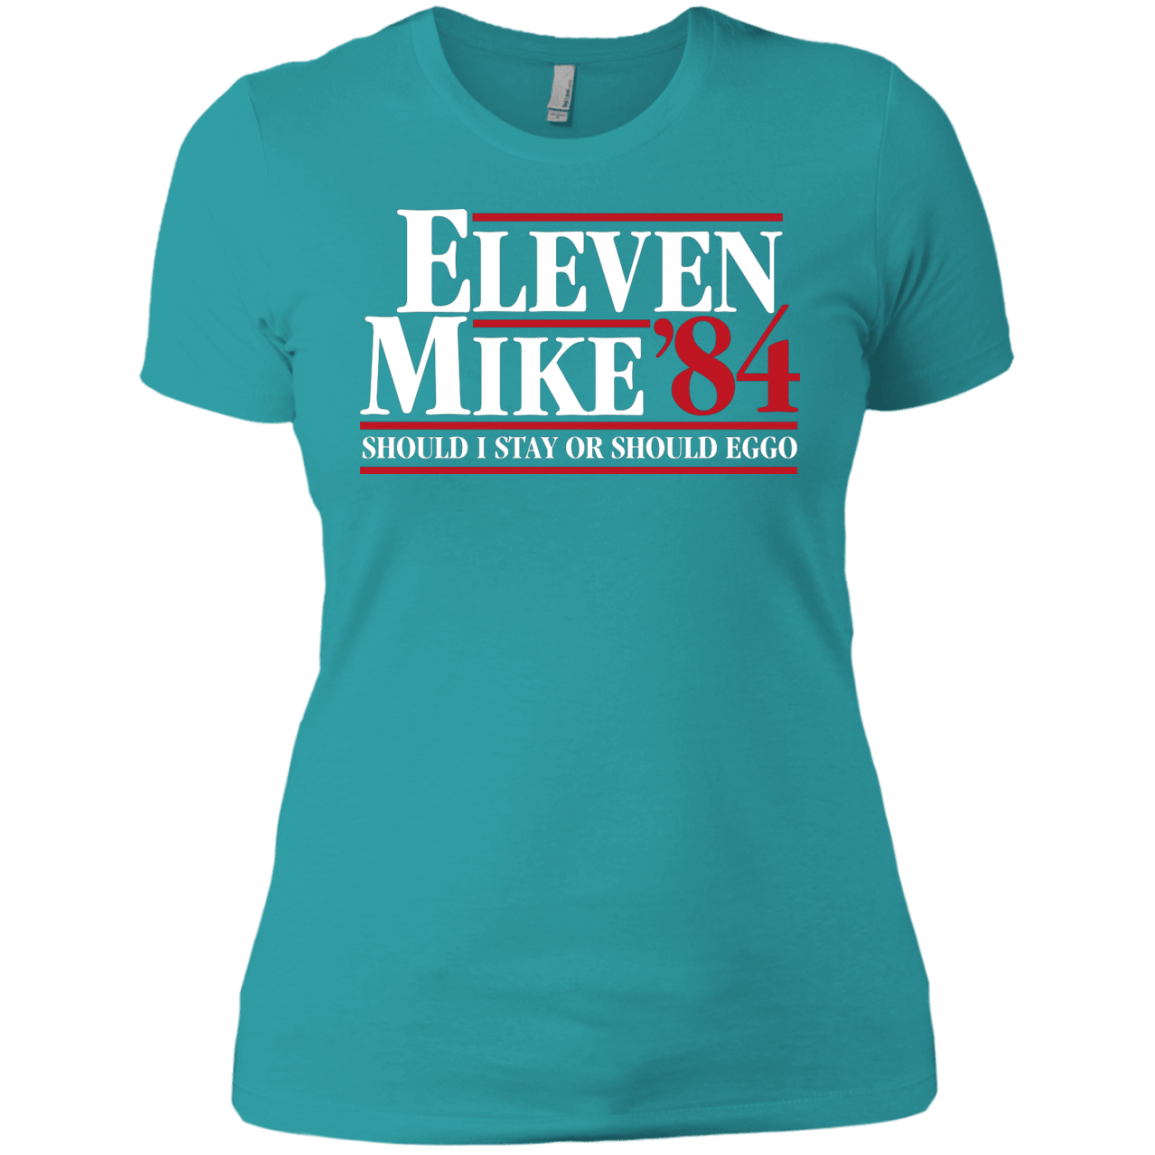 T-Shirts Tahiti Blue / X-Small Eleven Mike 84 - Should I Stay or Should Eggo Women's Premium T-Shirt